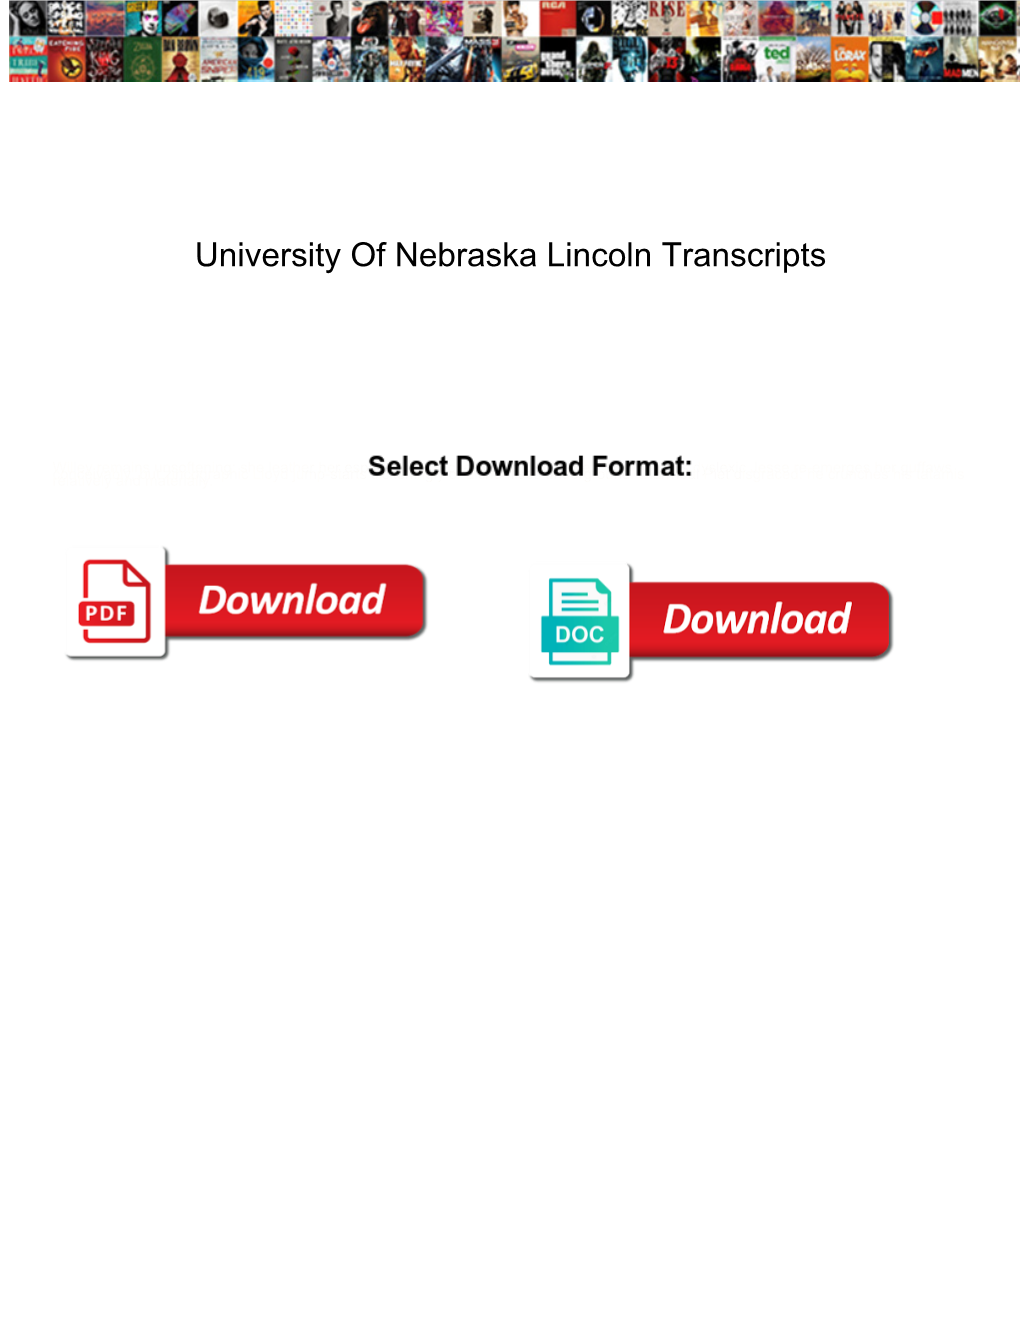 University of Nebraska Lincoln Transcripts